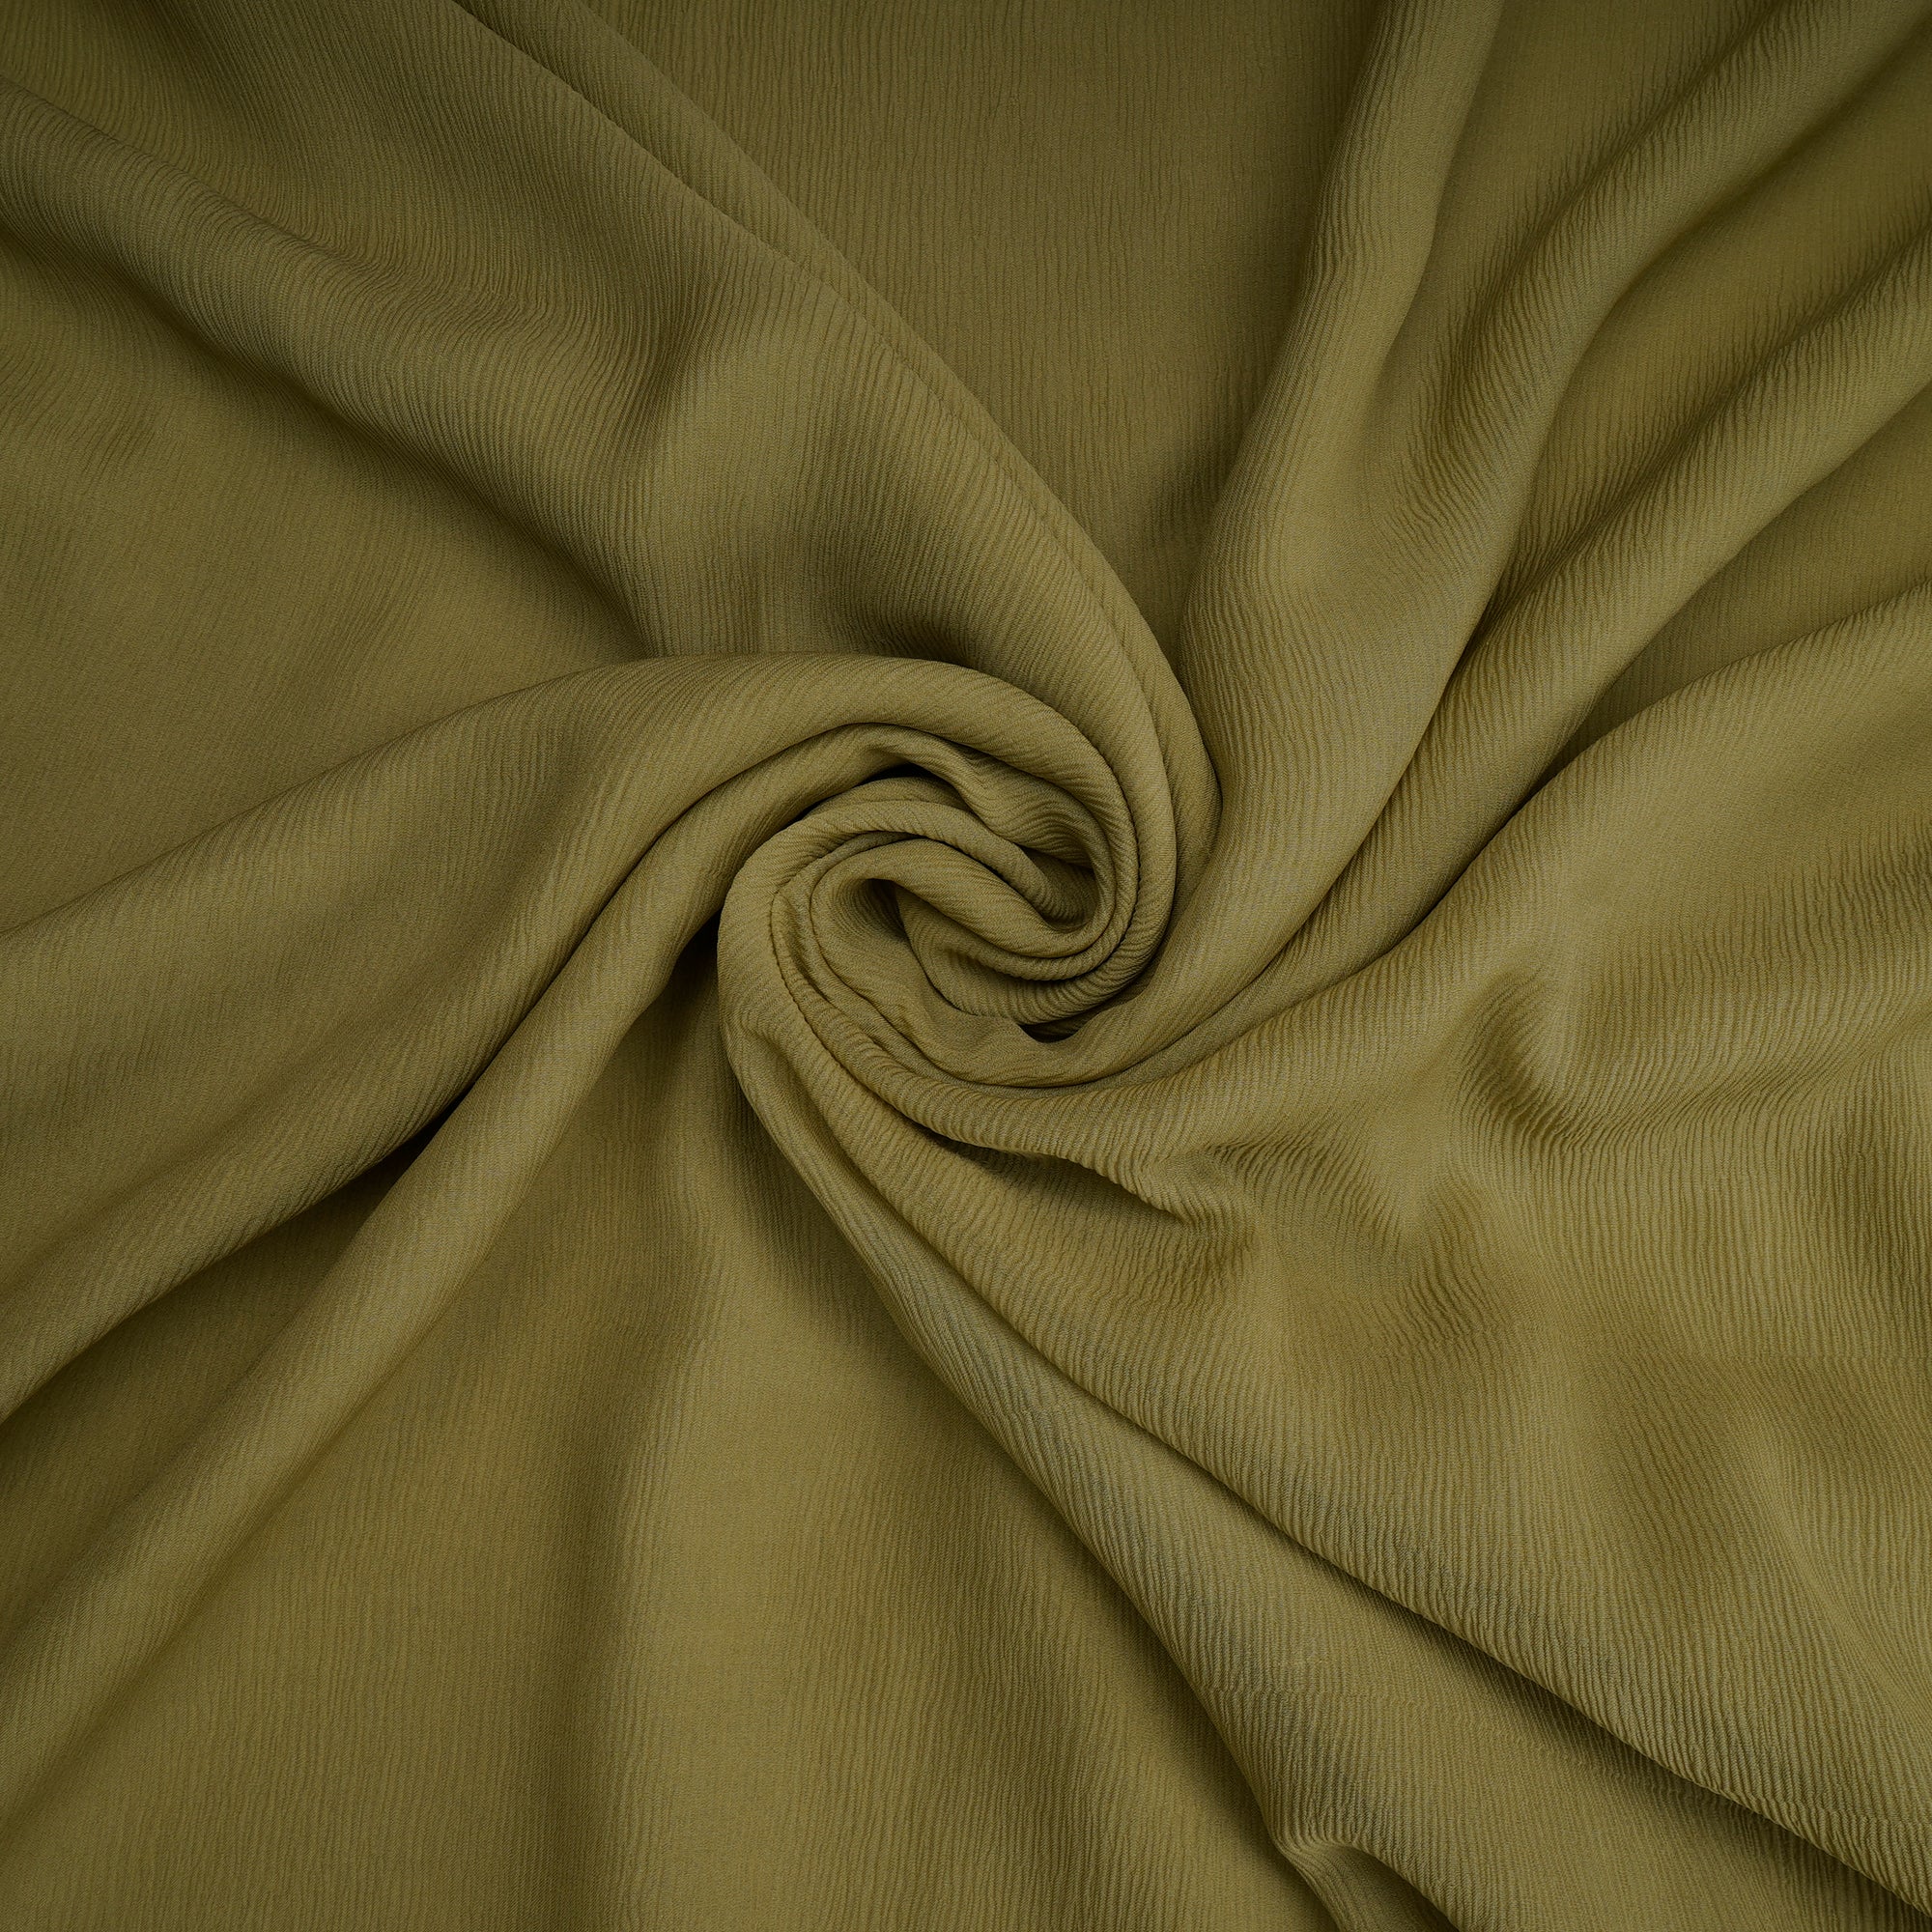 Olive Green Color Chiffon Silk Fabric